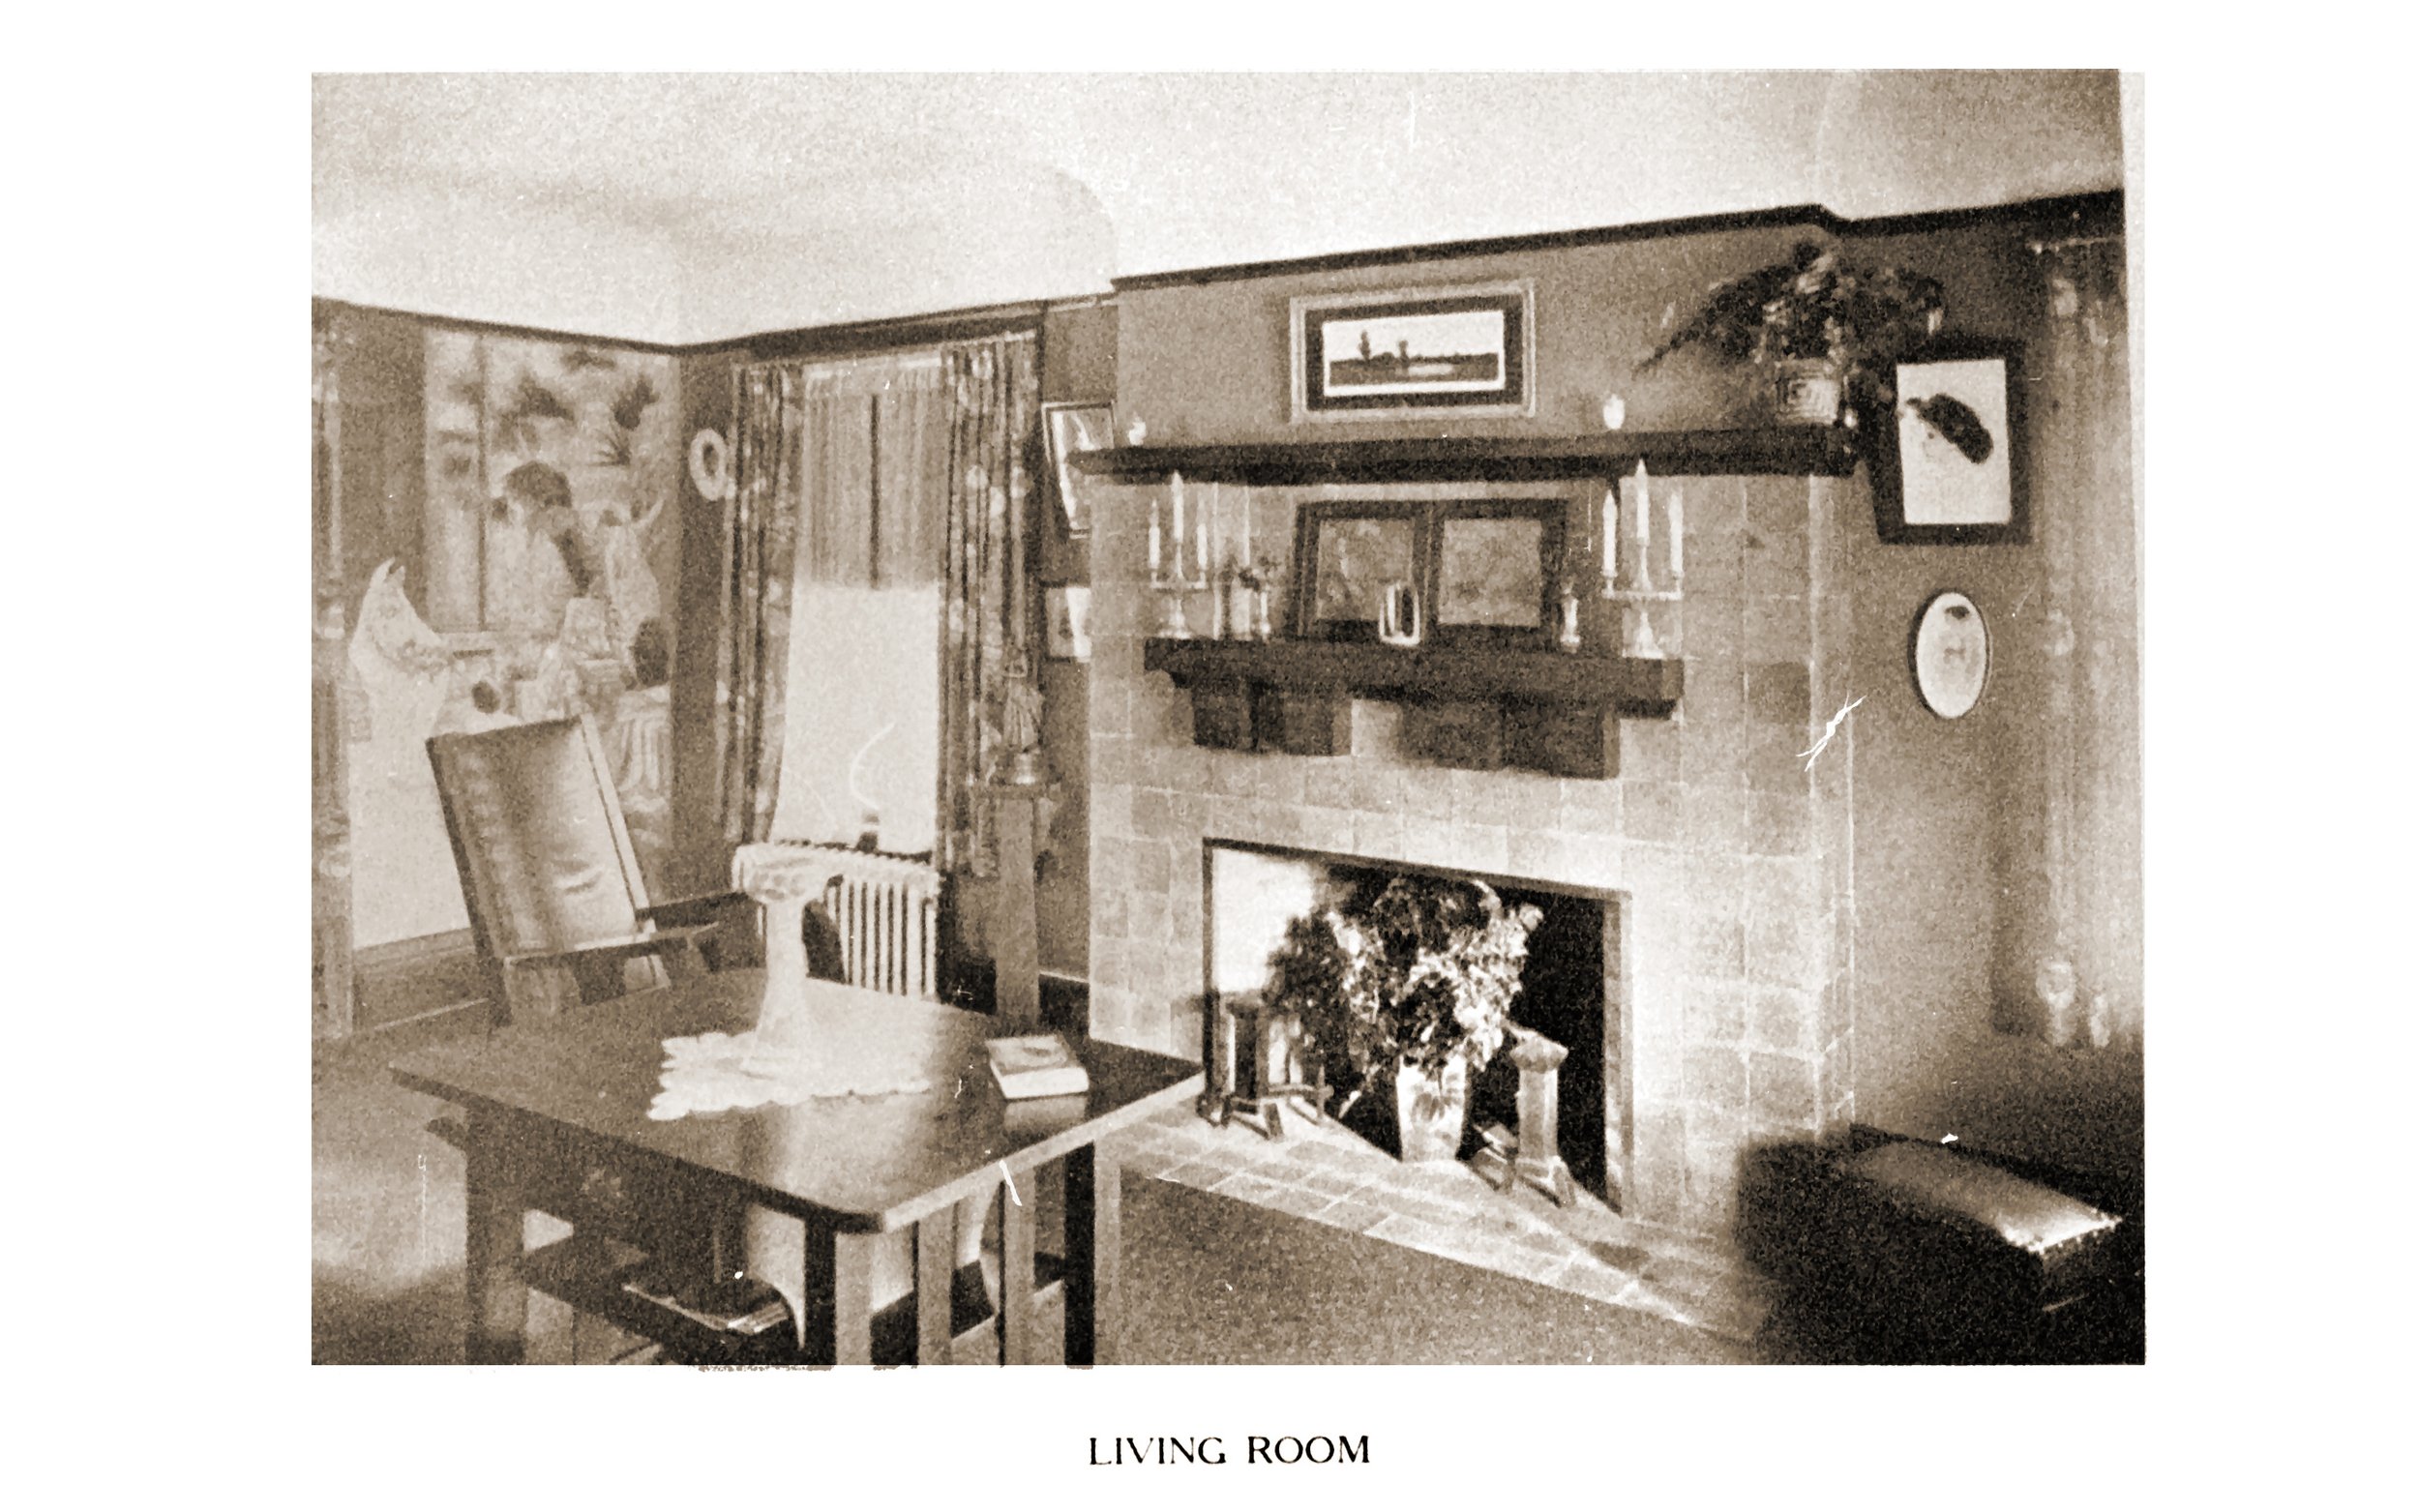  Living room of H. P. Palmer House, corner of NE 18th and Thompson. Richard Martin Jr. architect, ca. 1910.&nbsp; 